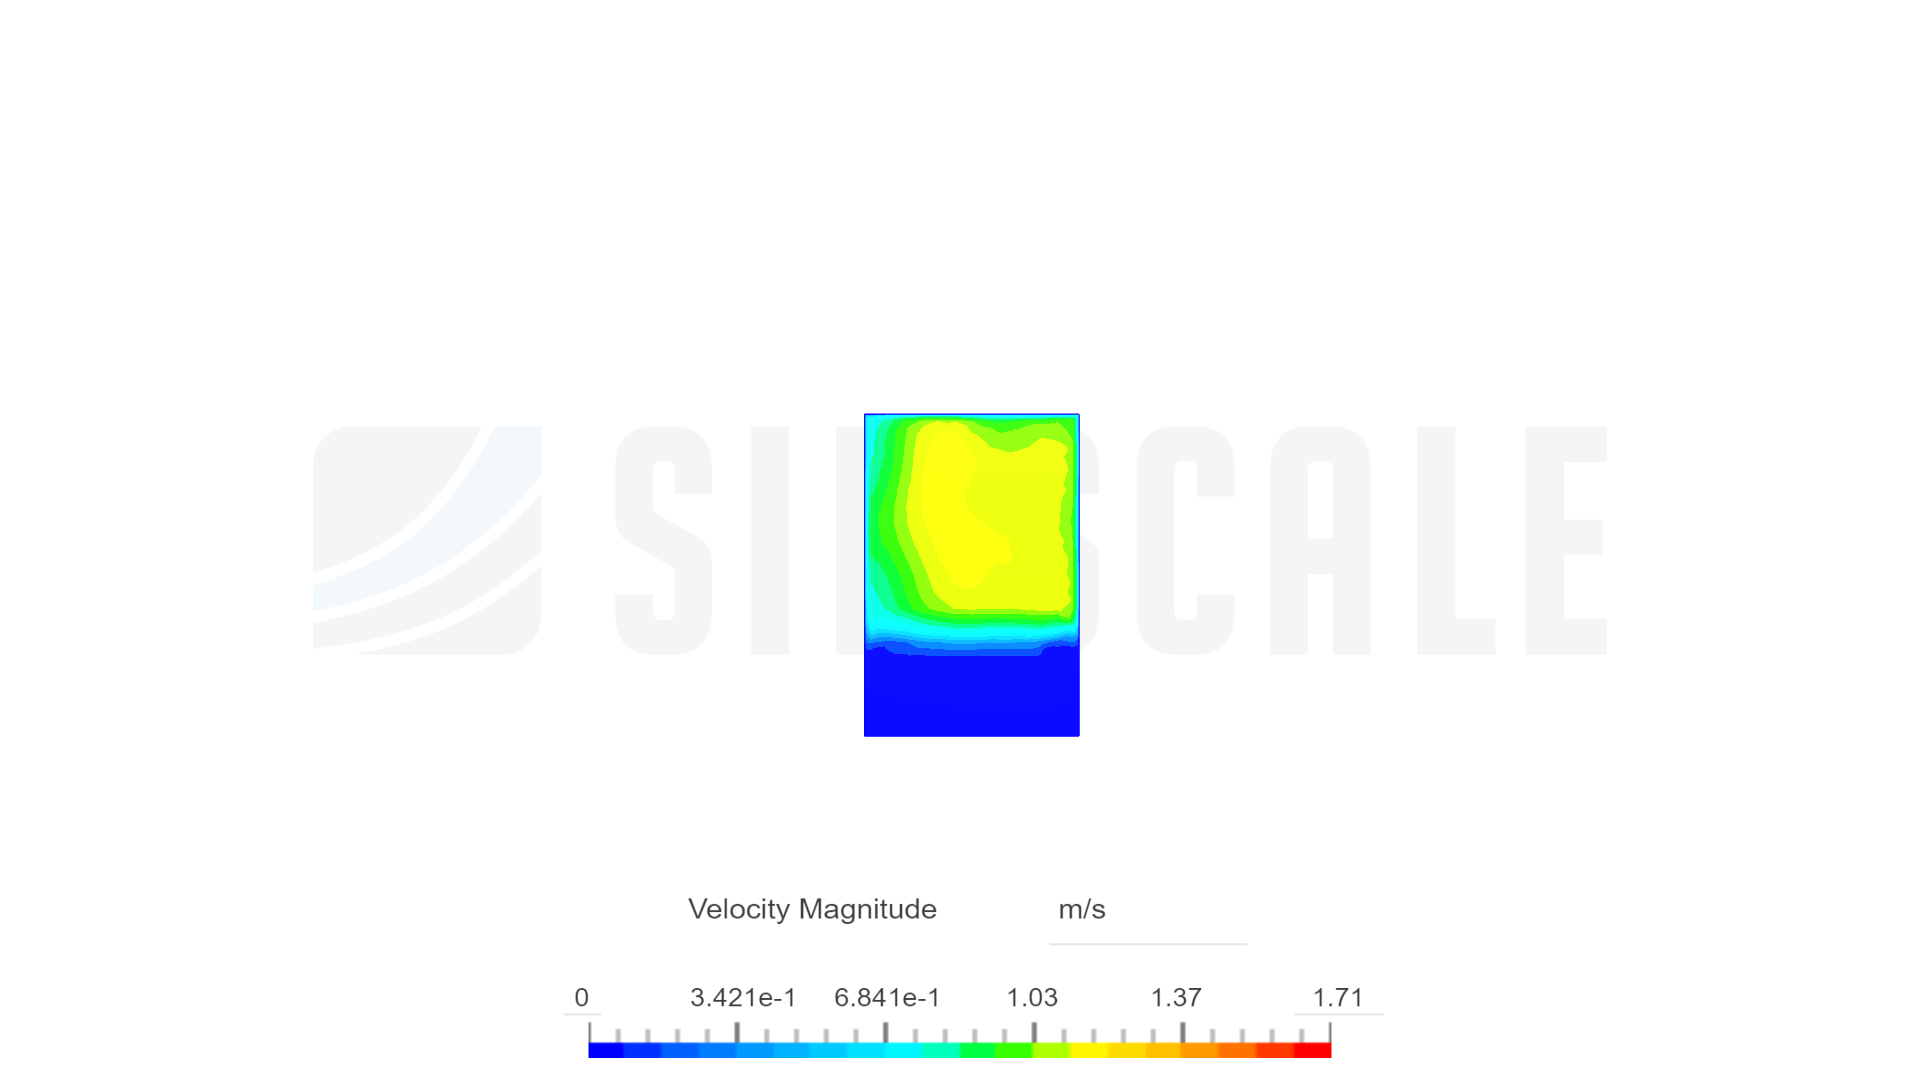 linear ventillation system image